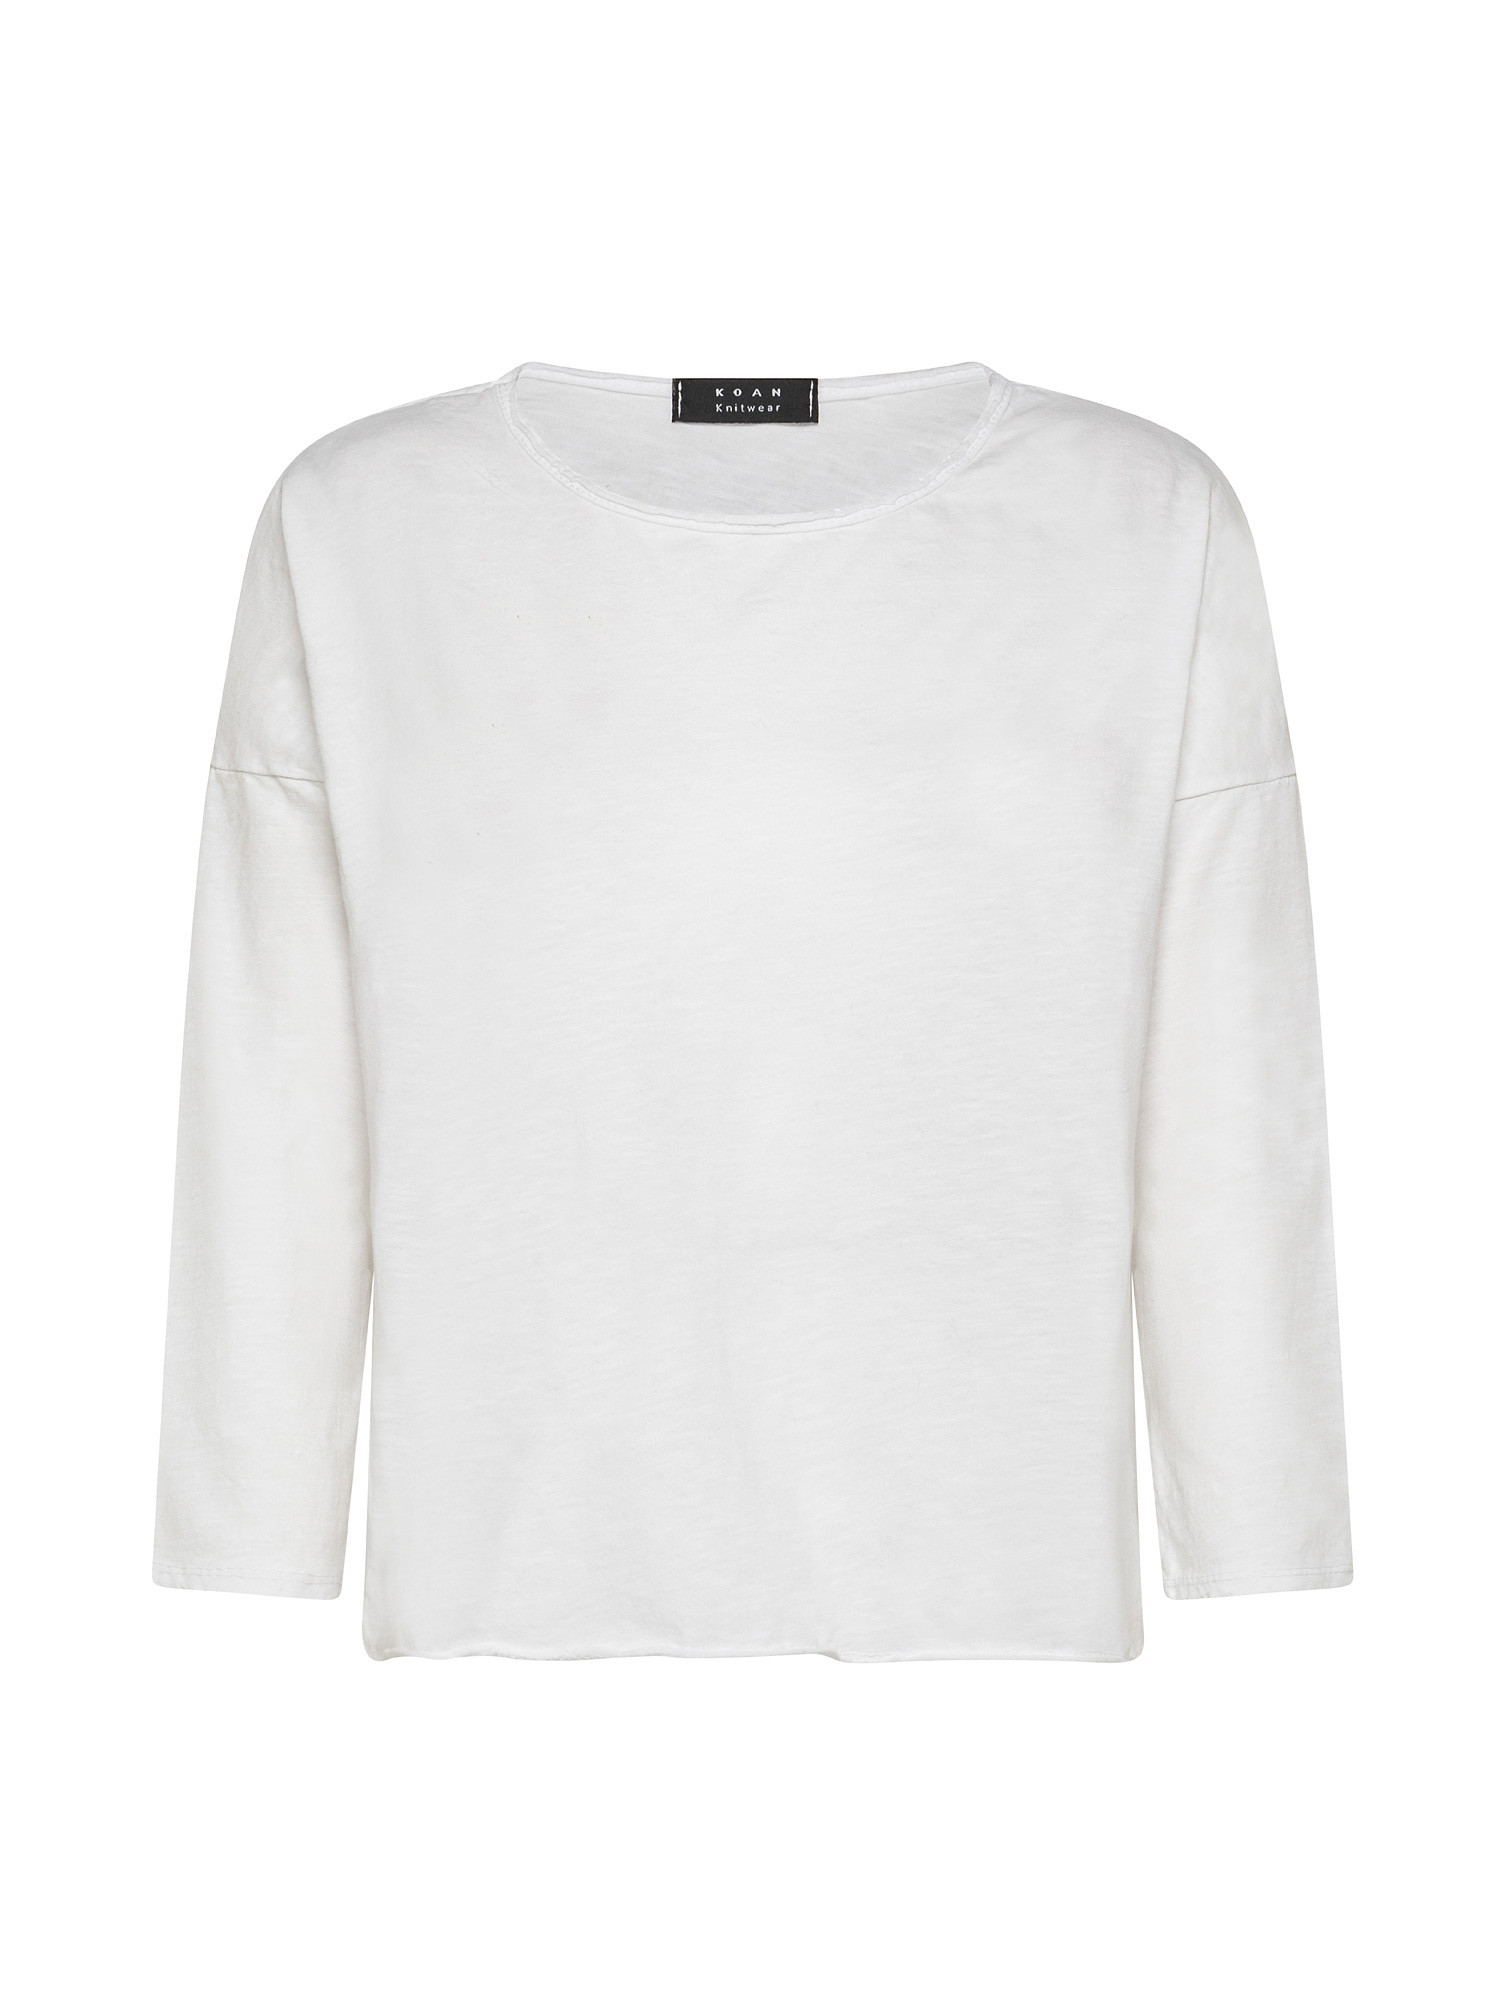 T-shirt over, Bianco, large